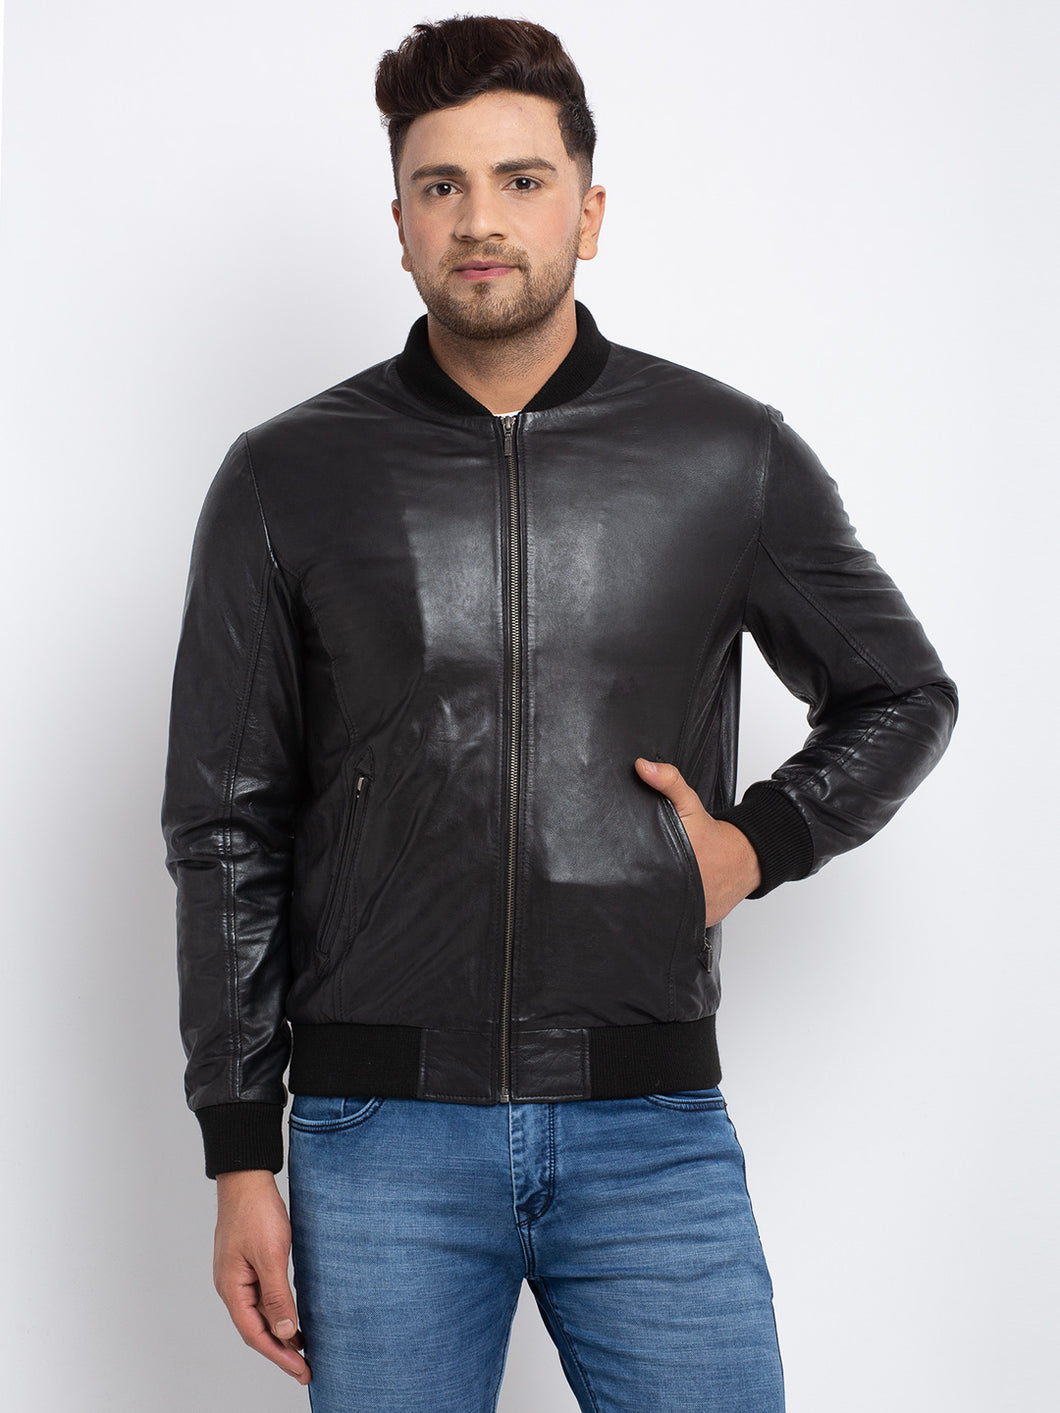 VAINAS European Brand Mens Leather jacket for men Winter Real leather jacket  Genuine sheep leather jackets Biker jackets Tomcat